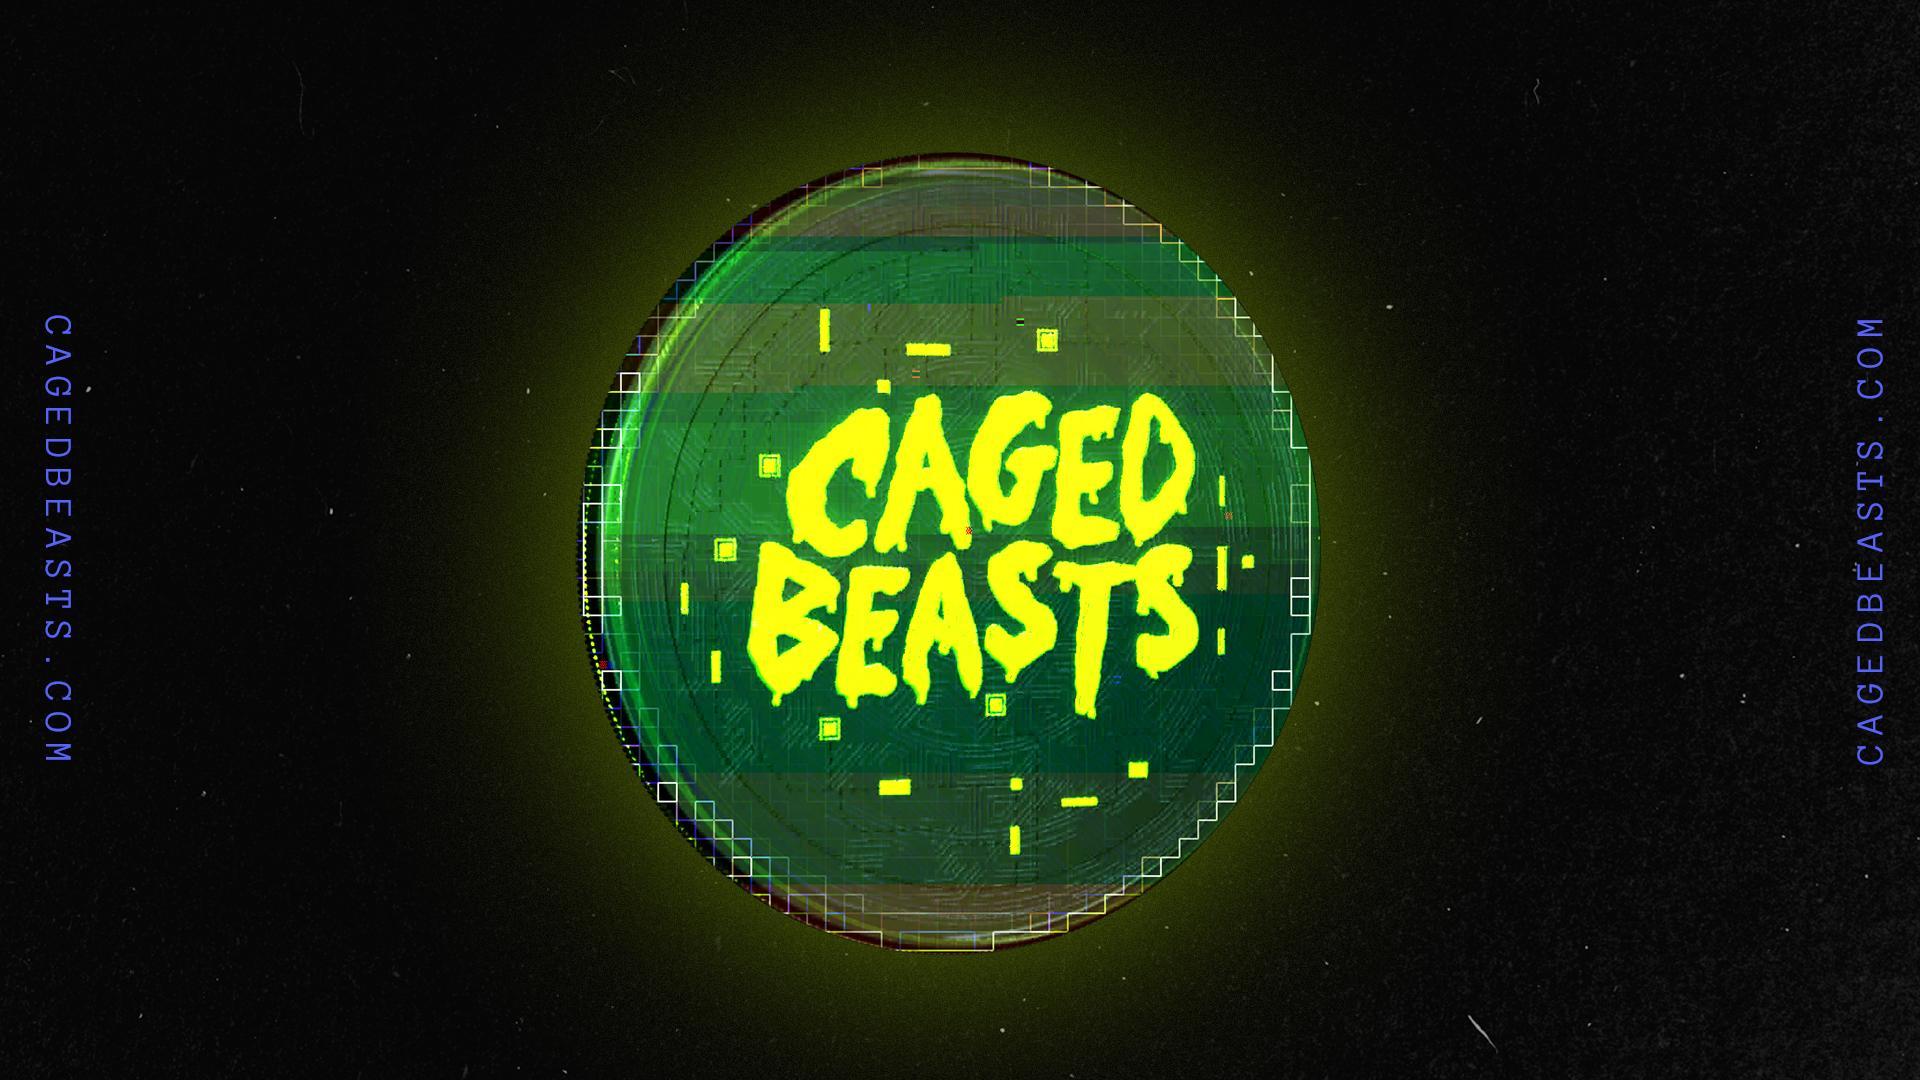 Bonus BEASTS Bonanza: The Three Meme Coins to Watch This Season - Big Eyes Coin, Caged Beasts, and Bob